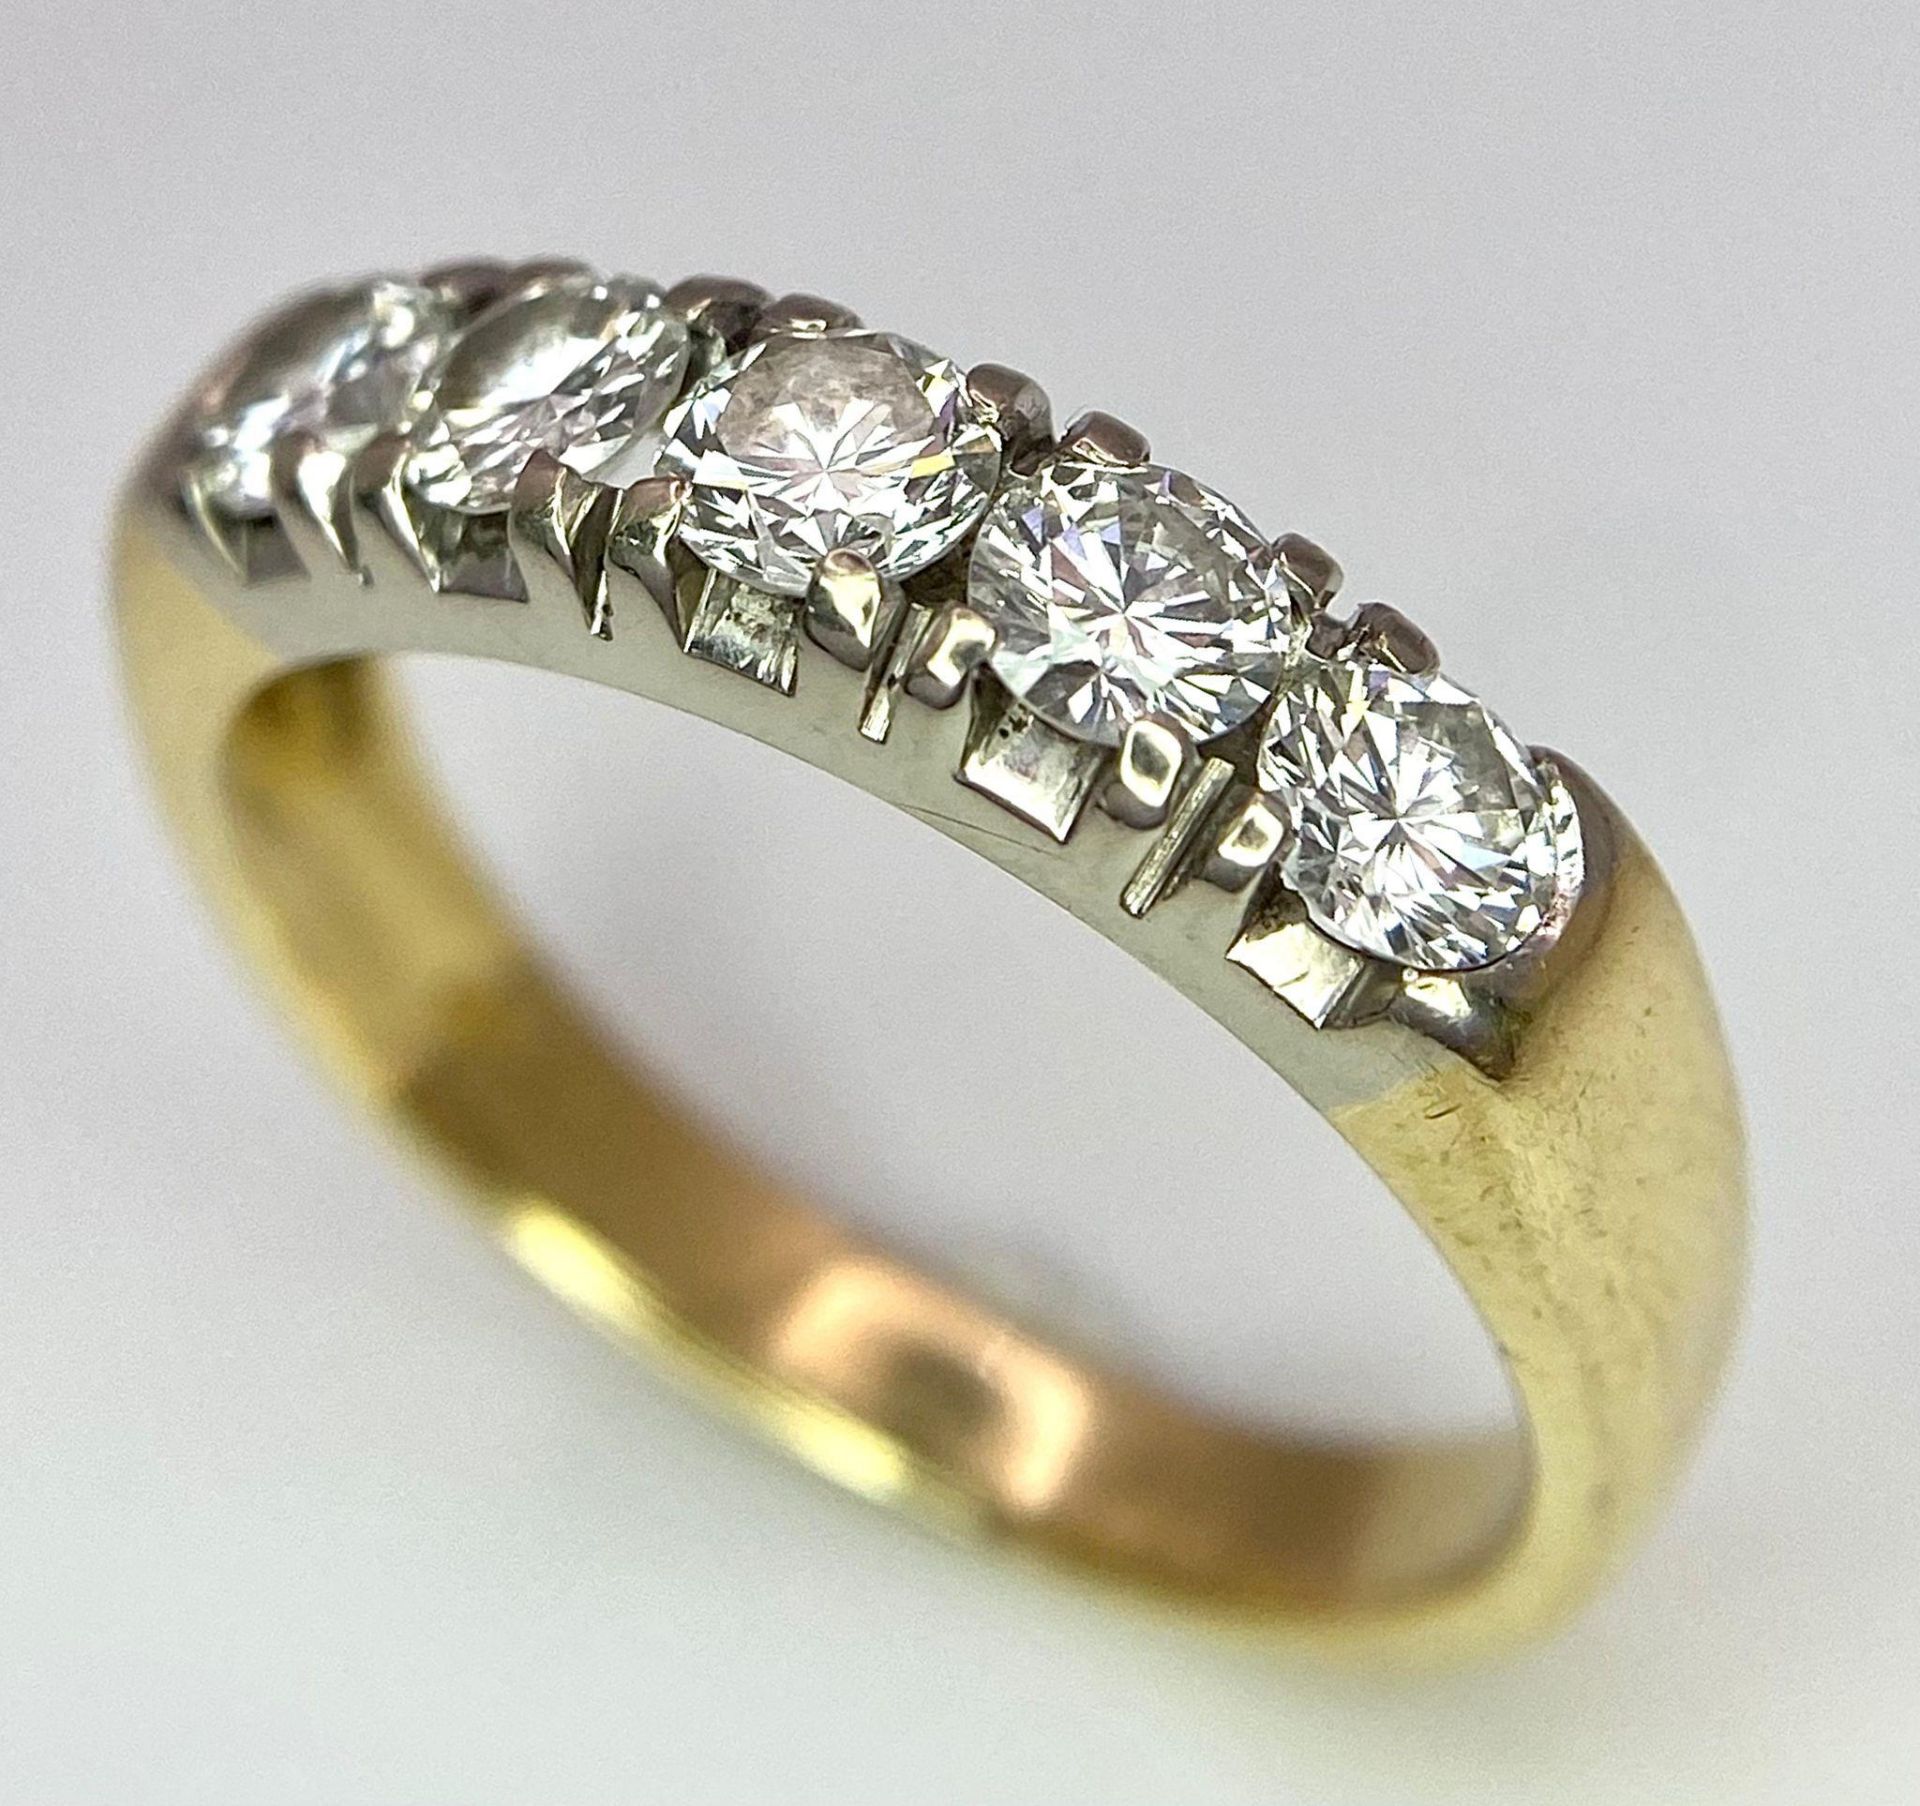 An 18K Yellow Gold Five Stone Diamond Ring. 0.85ctw of brilliant round cut diamonds. Size L. 3.6g